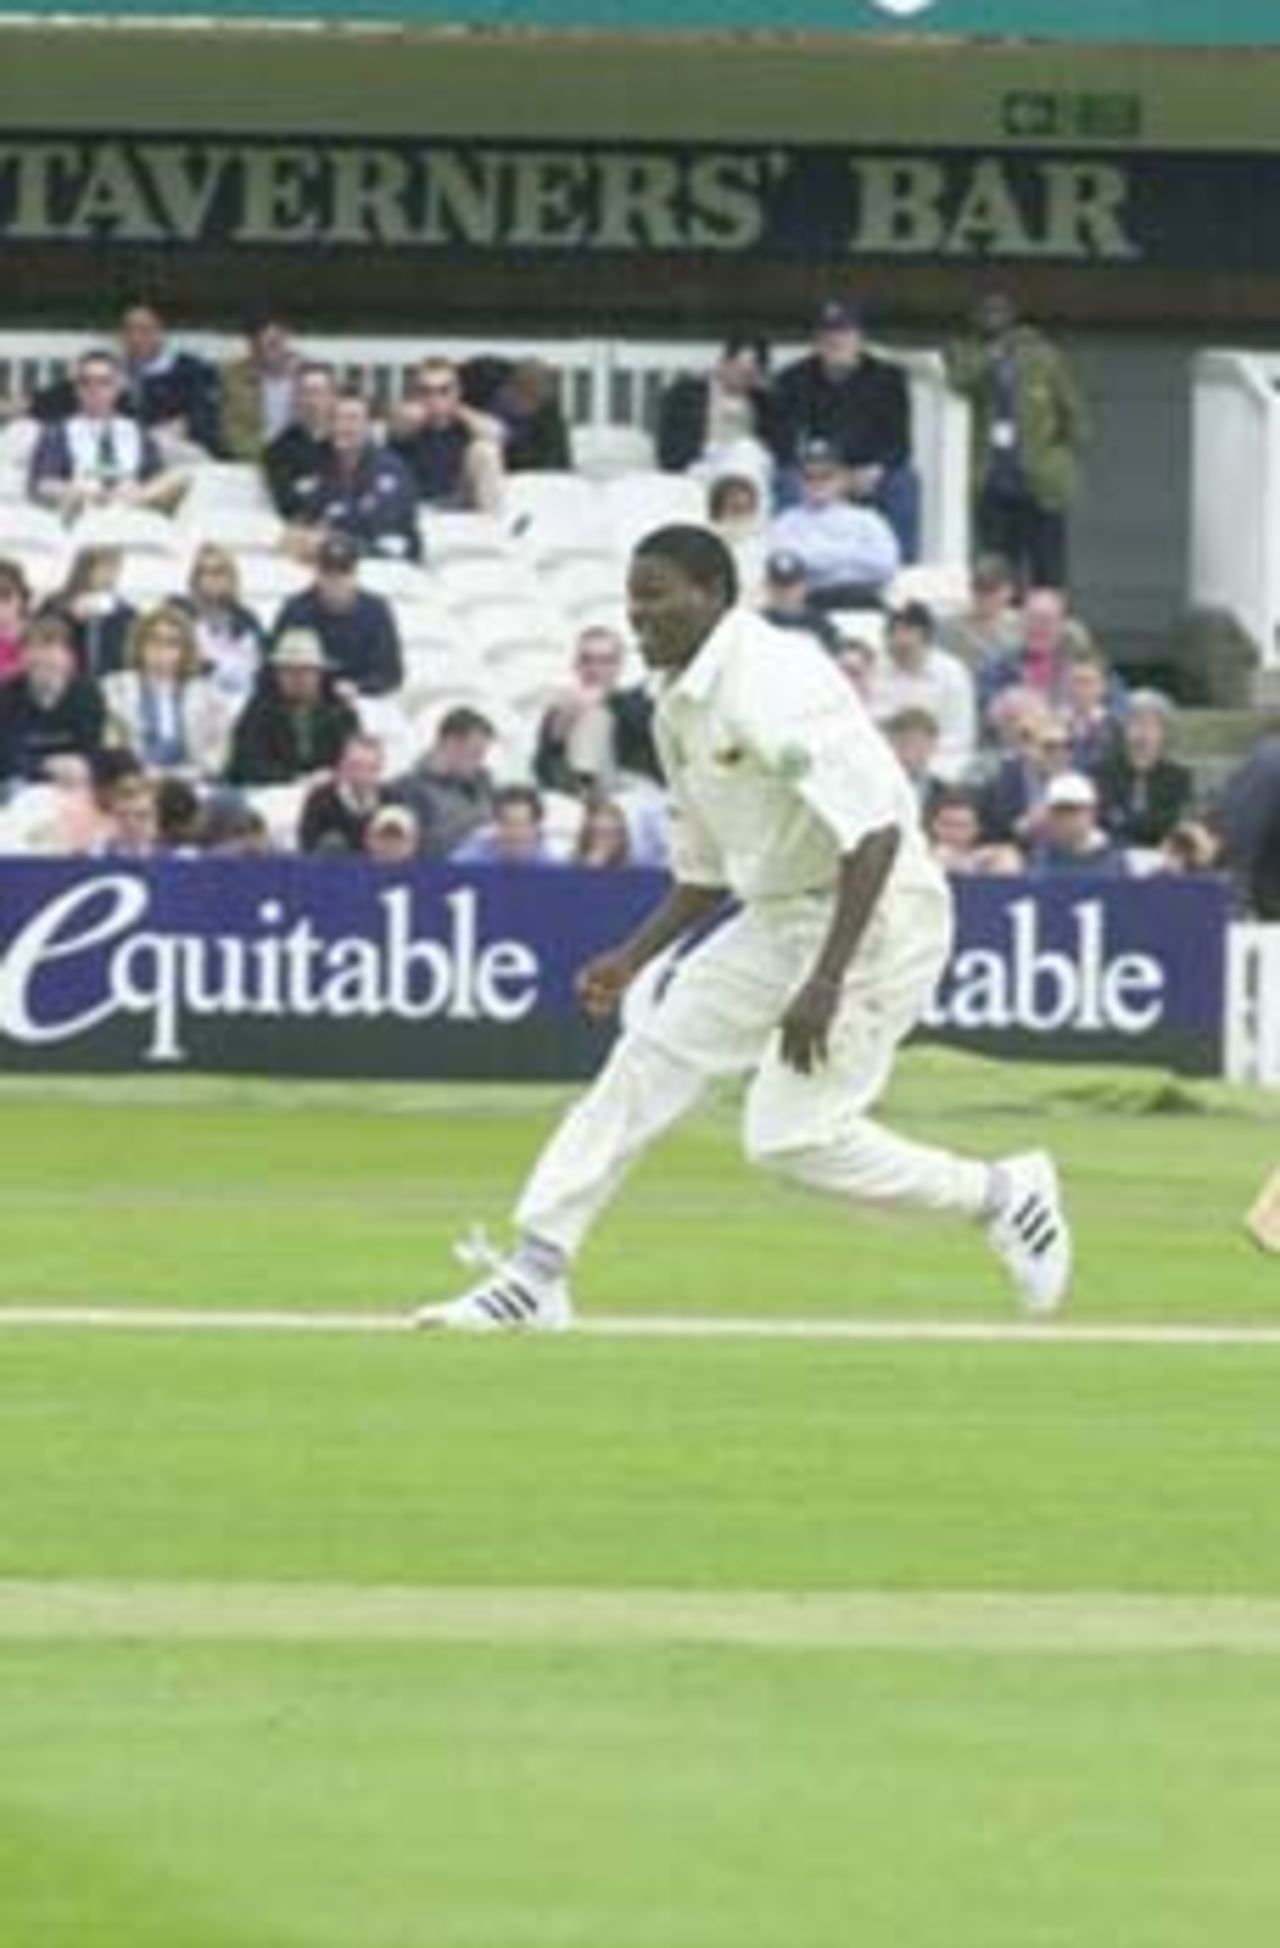 Mbangwa went wicketless in England's innings